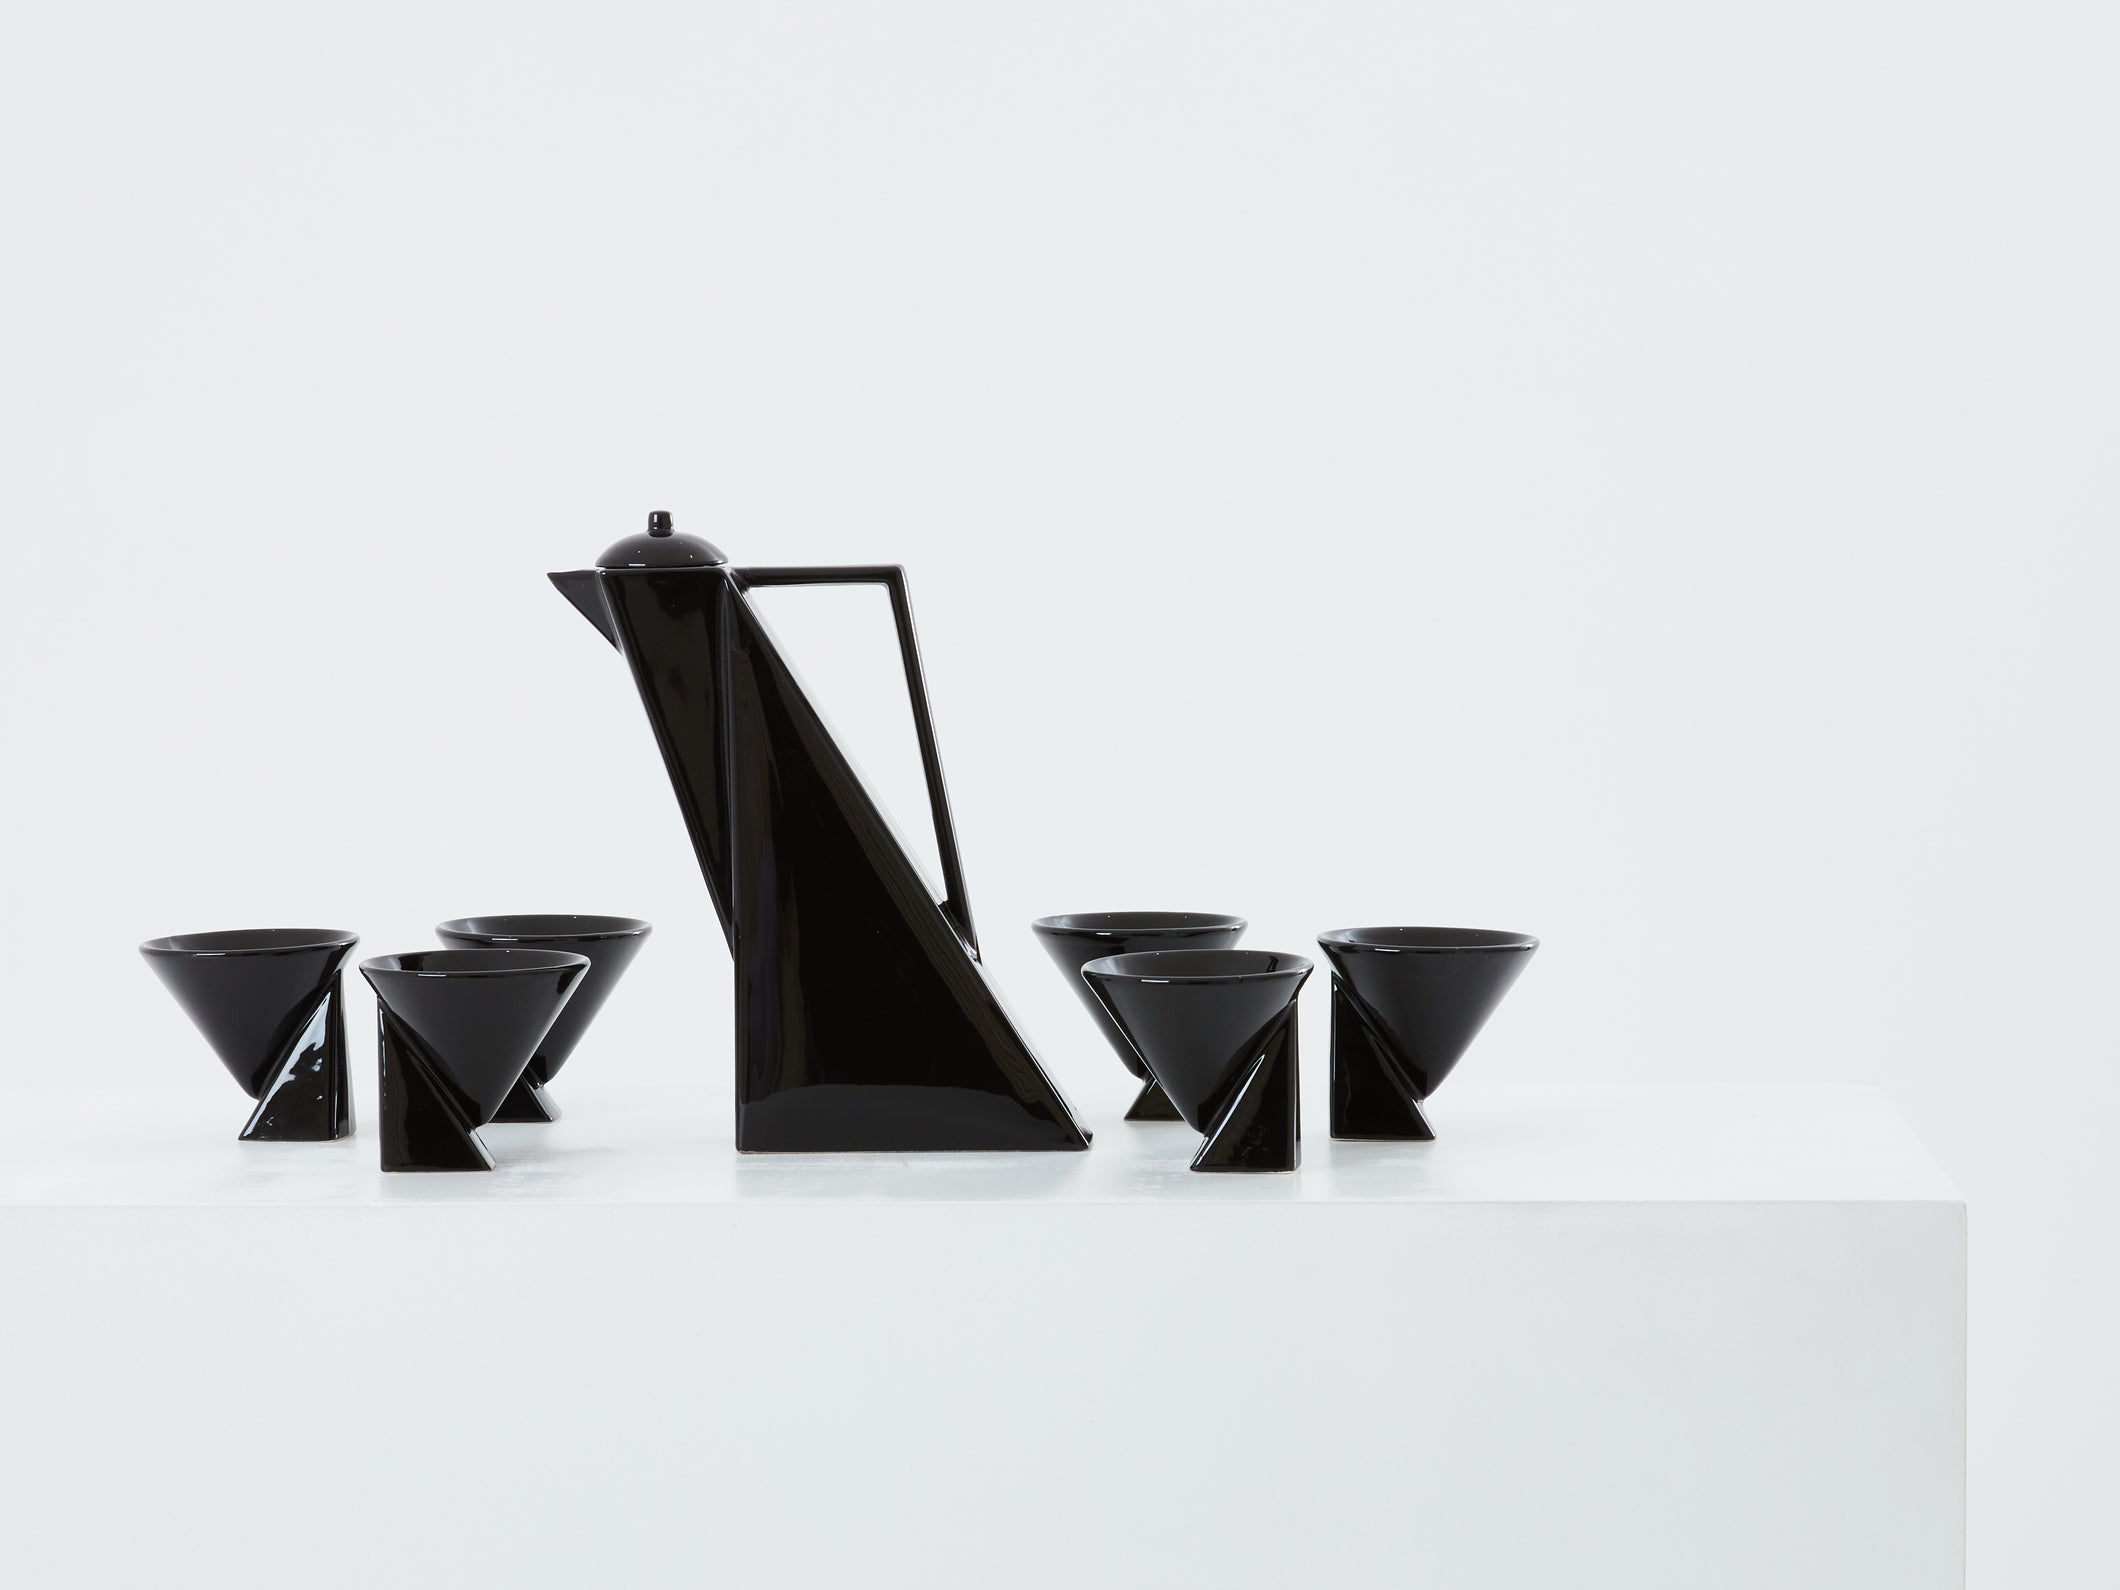 Pierre Casenove for Studio Salins glazed ceramic coffee set 1980s